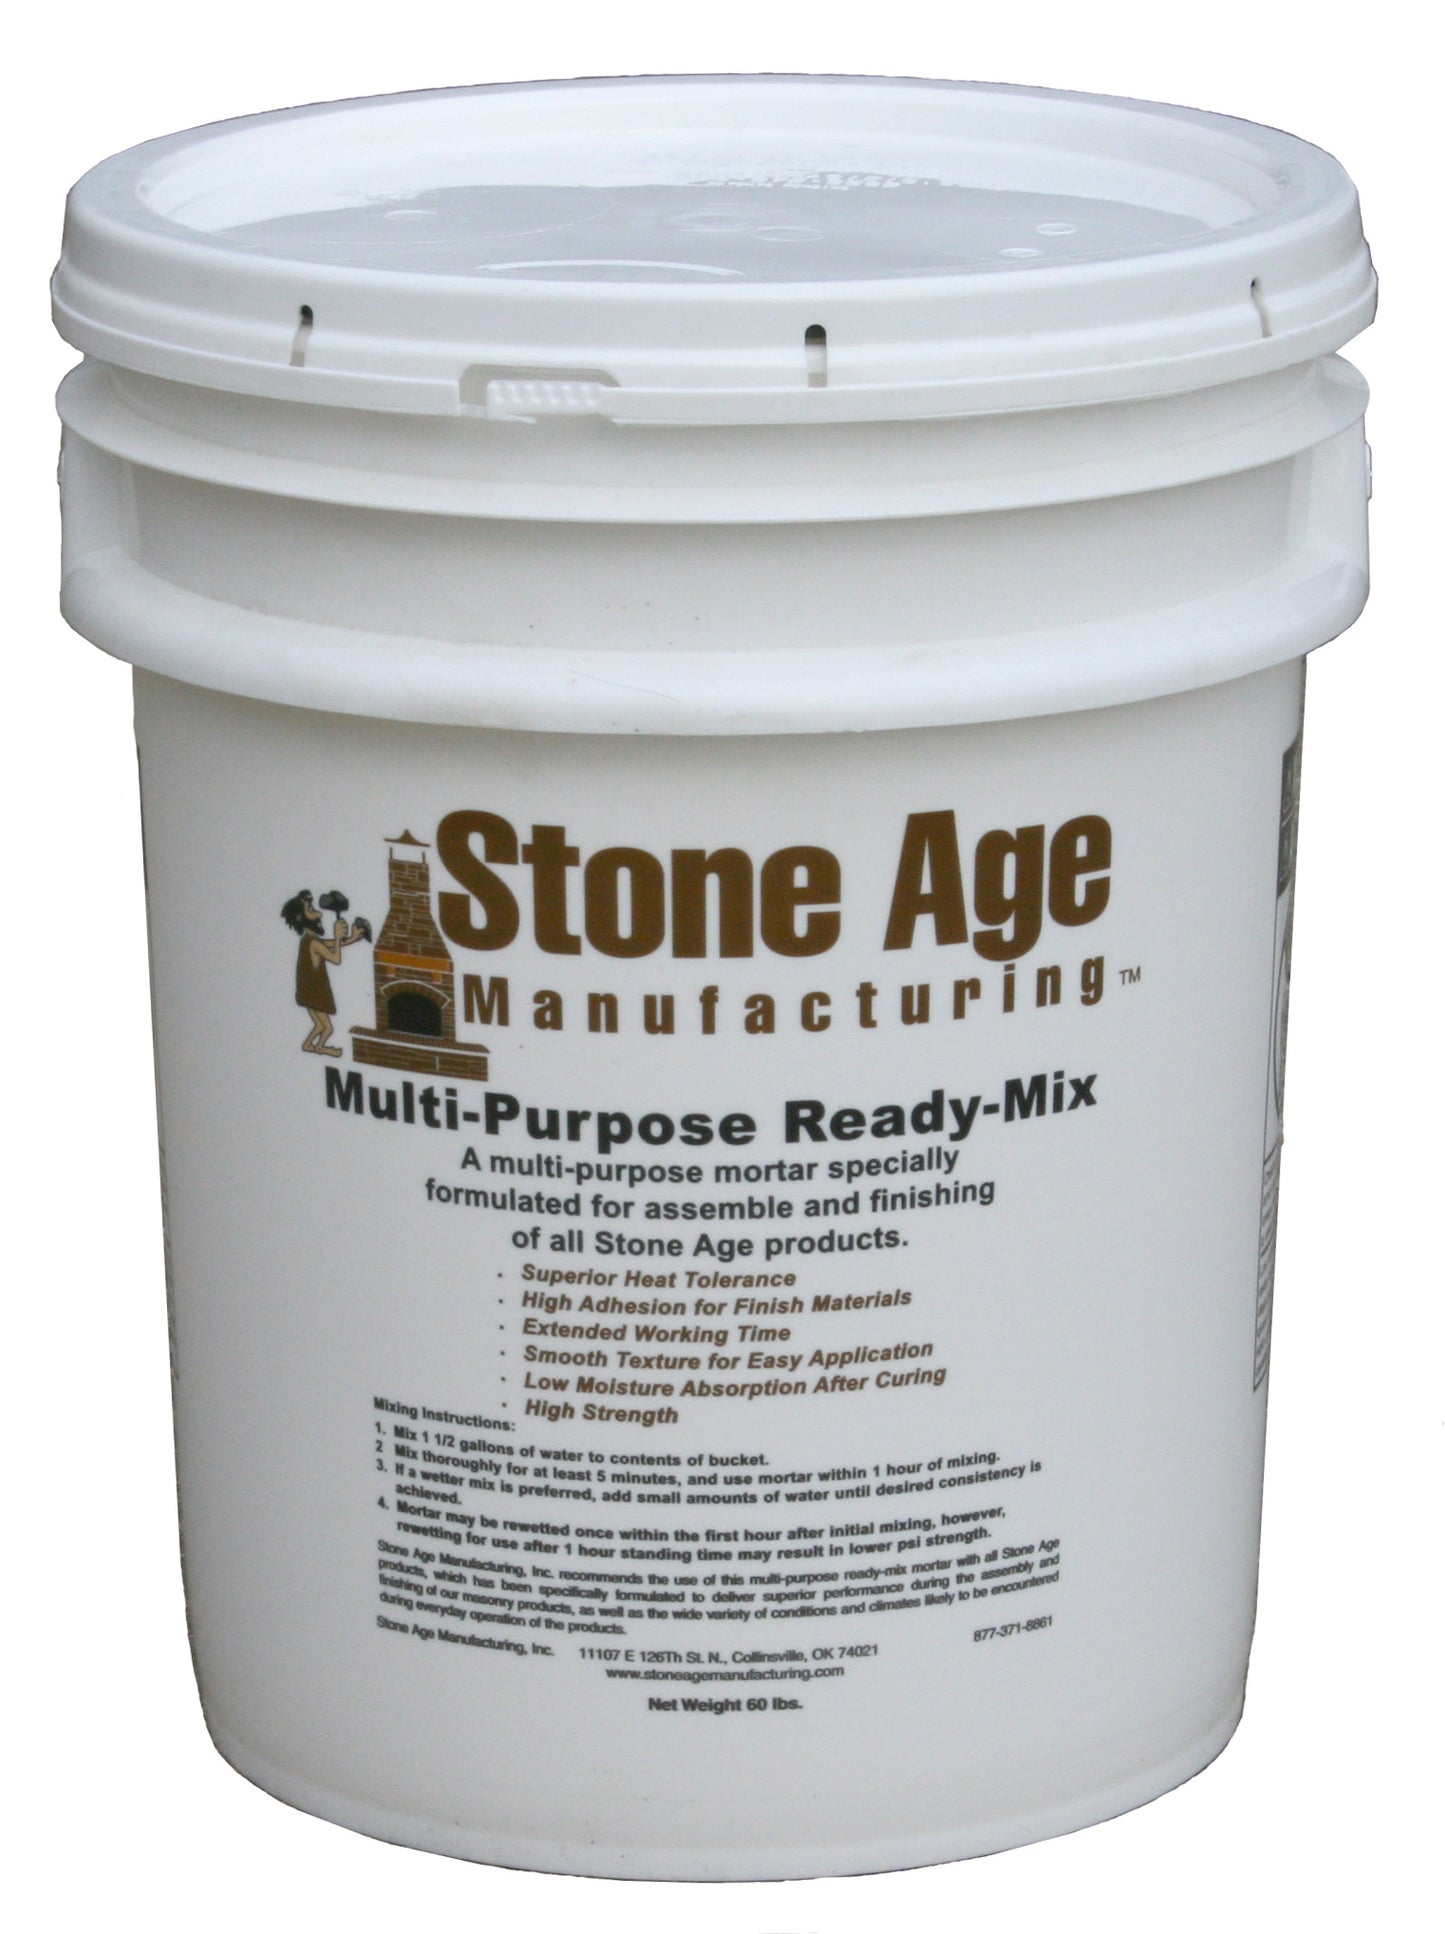 Stone Age Multi-Purpose Ready-Mix